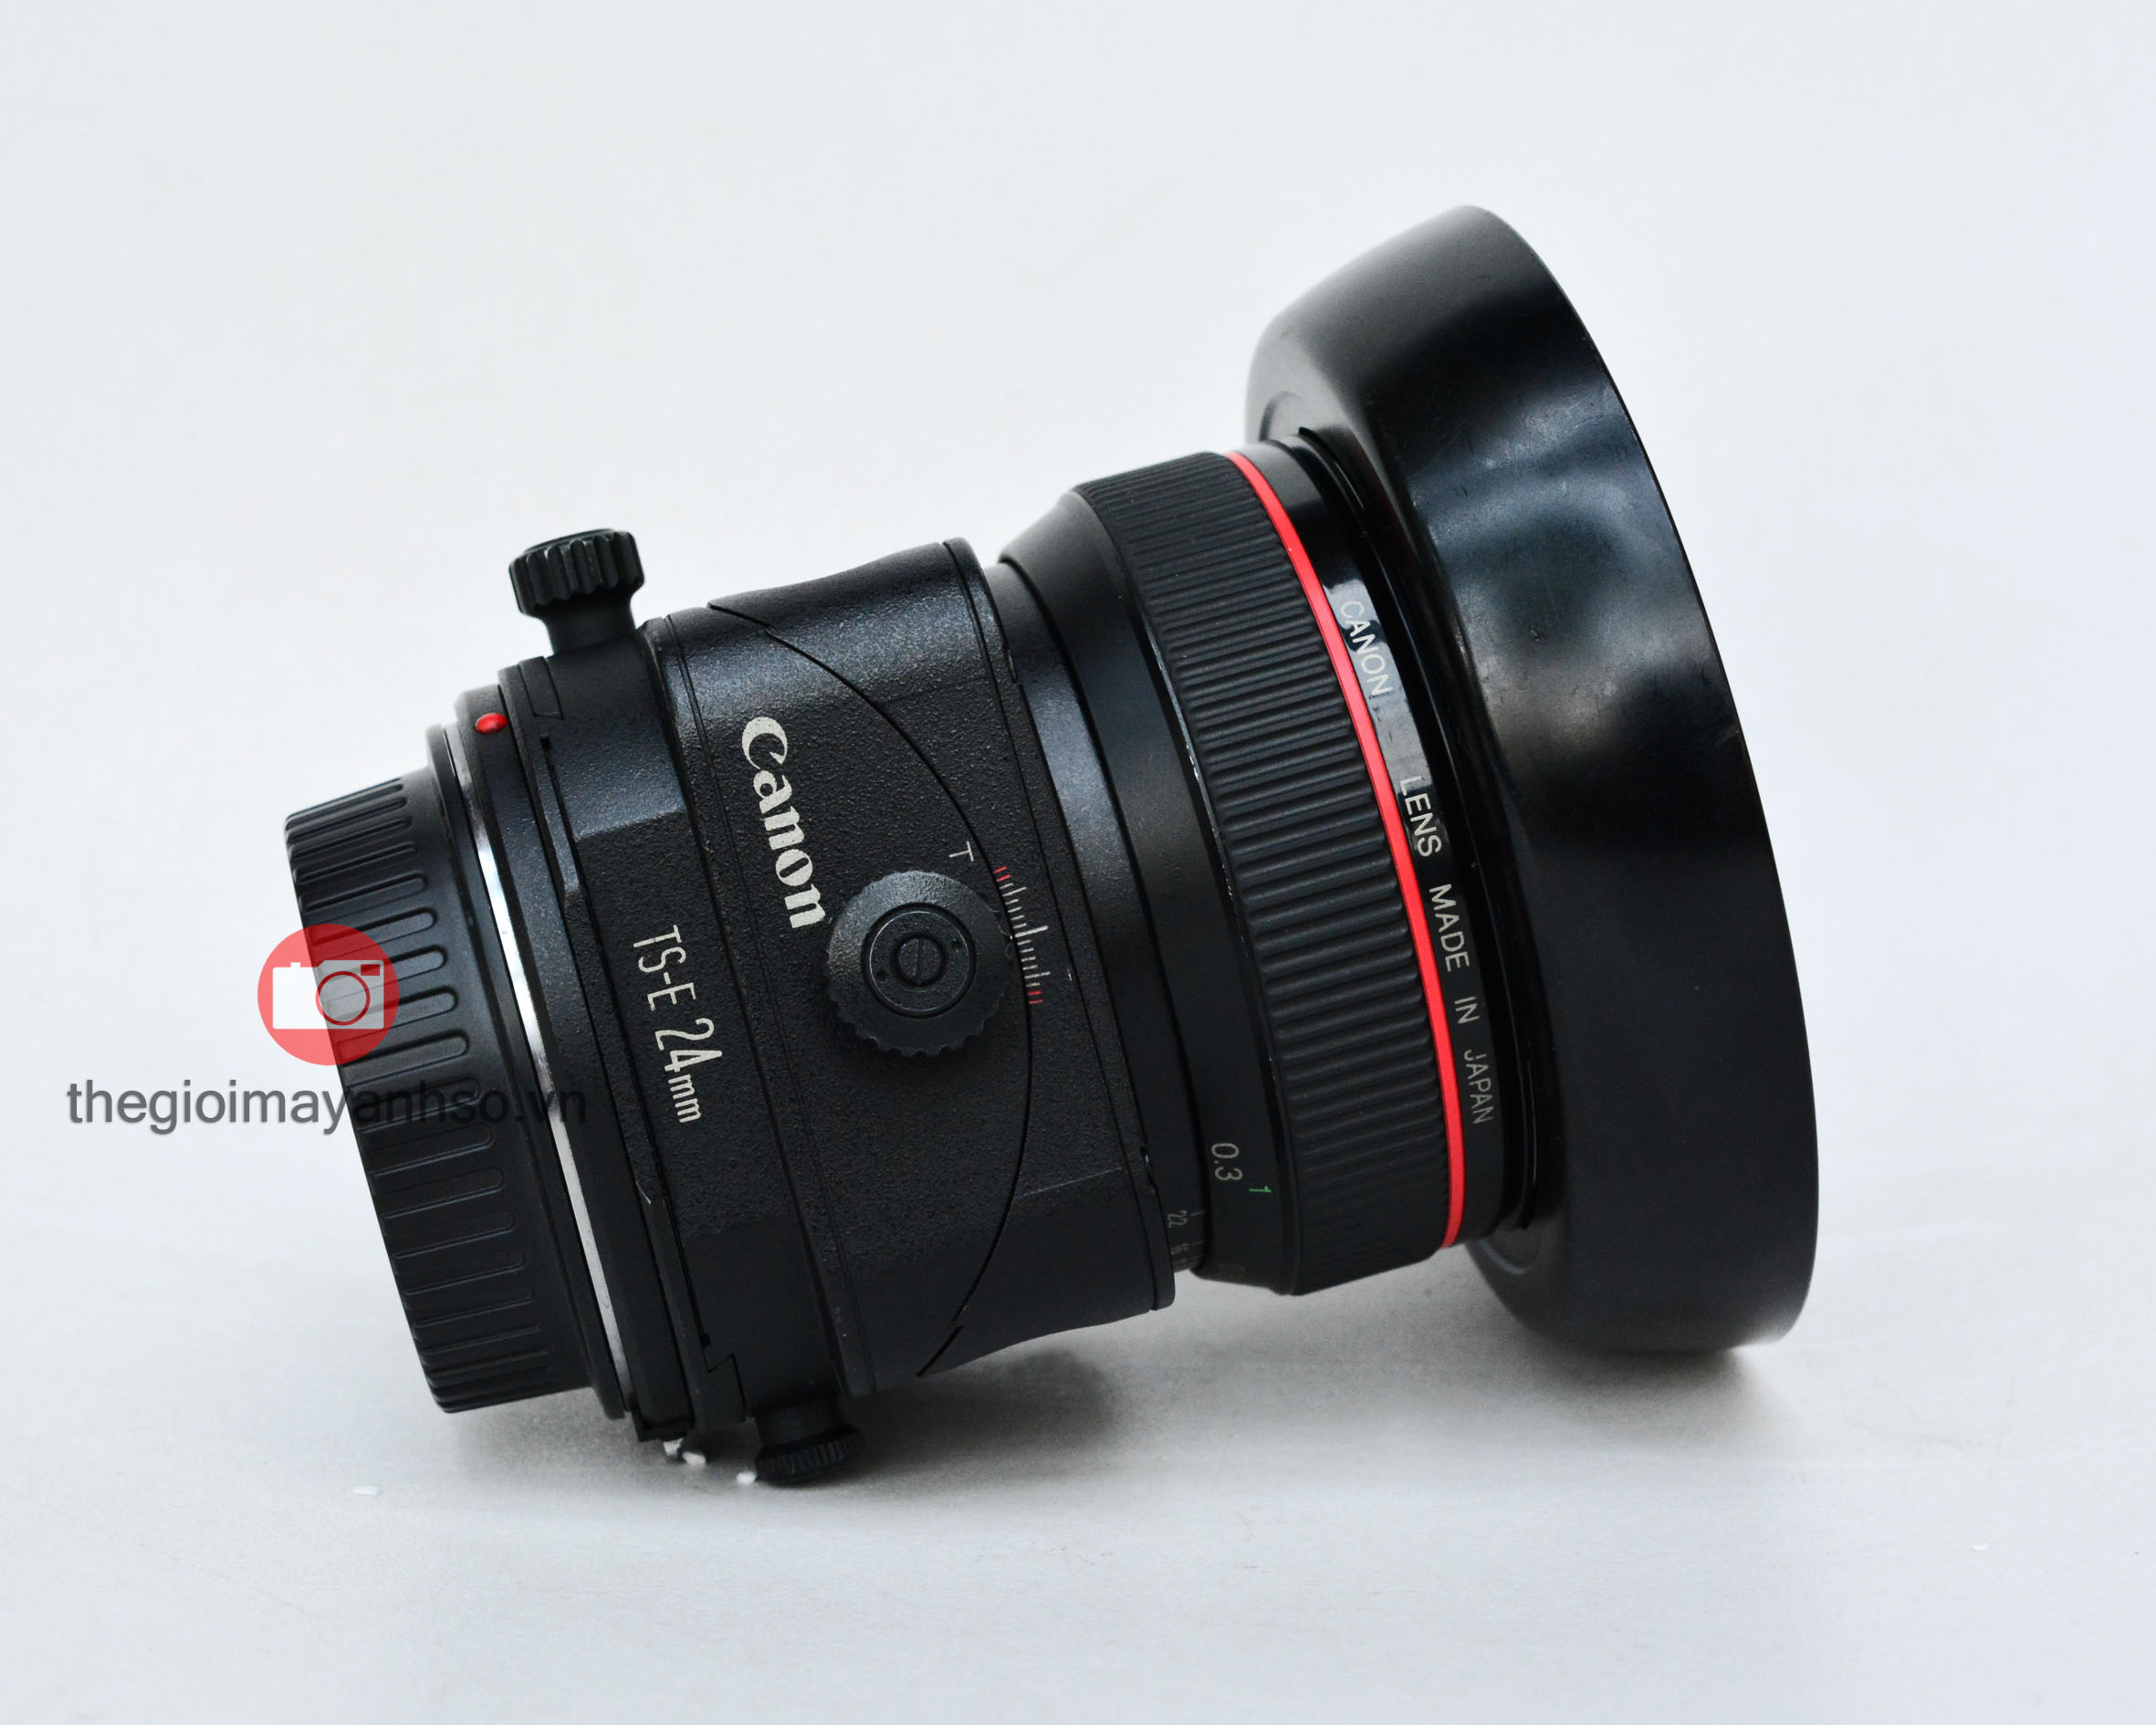 Canon TS-E 24mm f/3.5L Tilt-Shift Lens